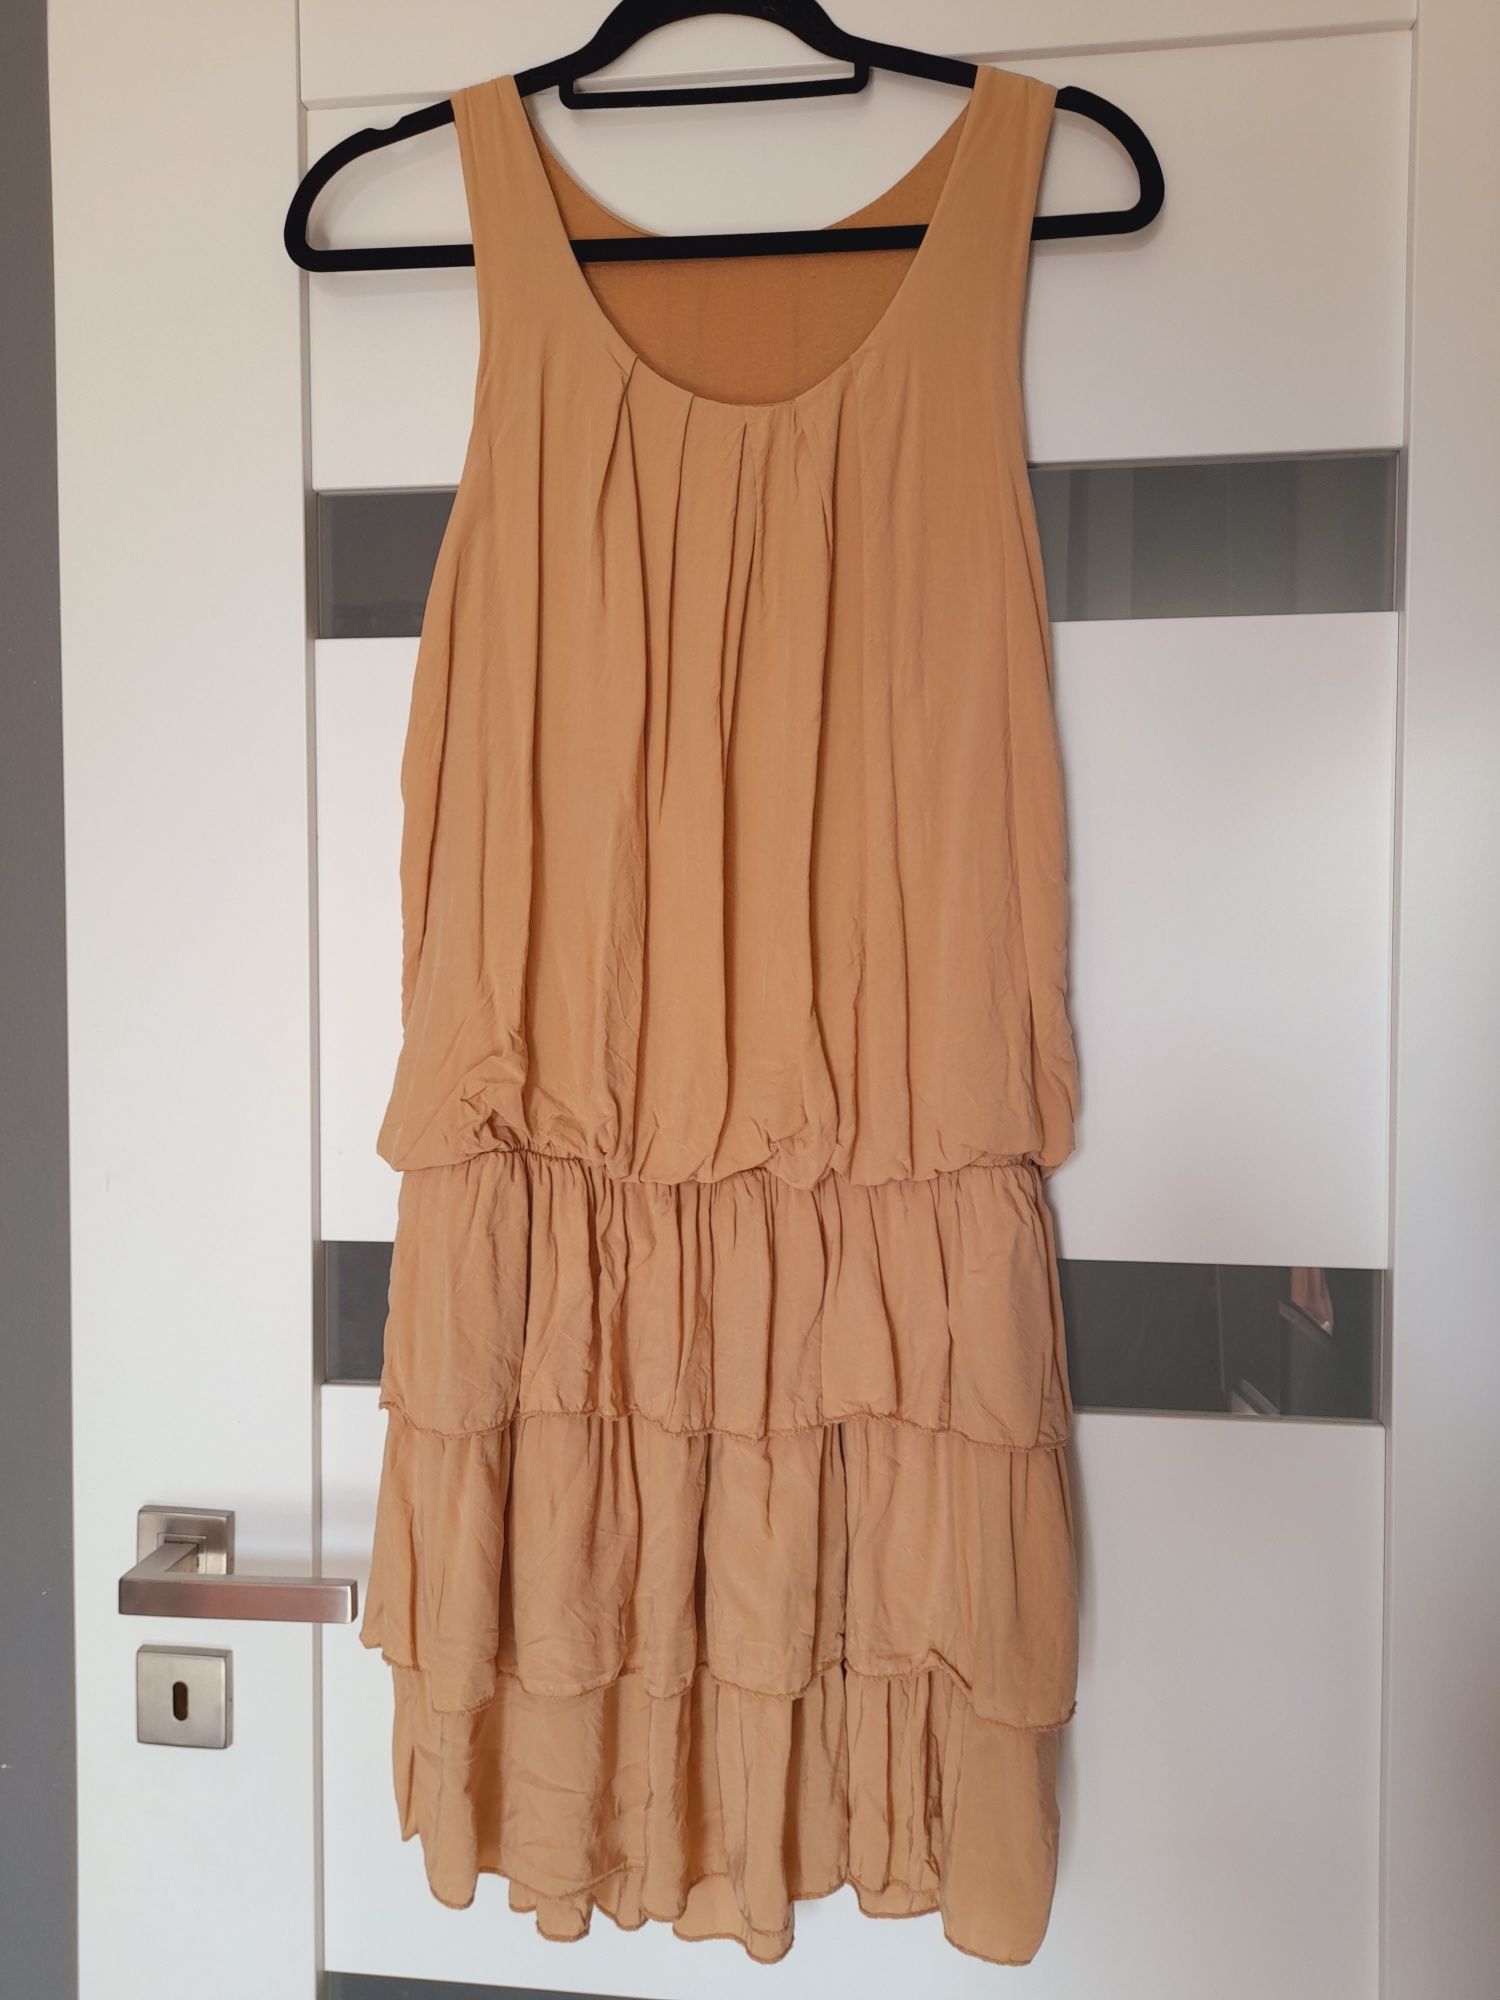 Camel carmel karmelowa sukienka beżowa Falbanki falbanka 36 38 S M